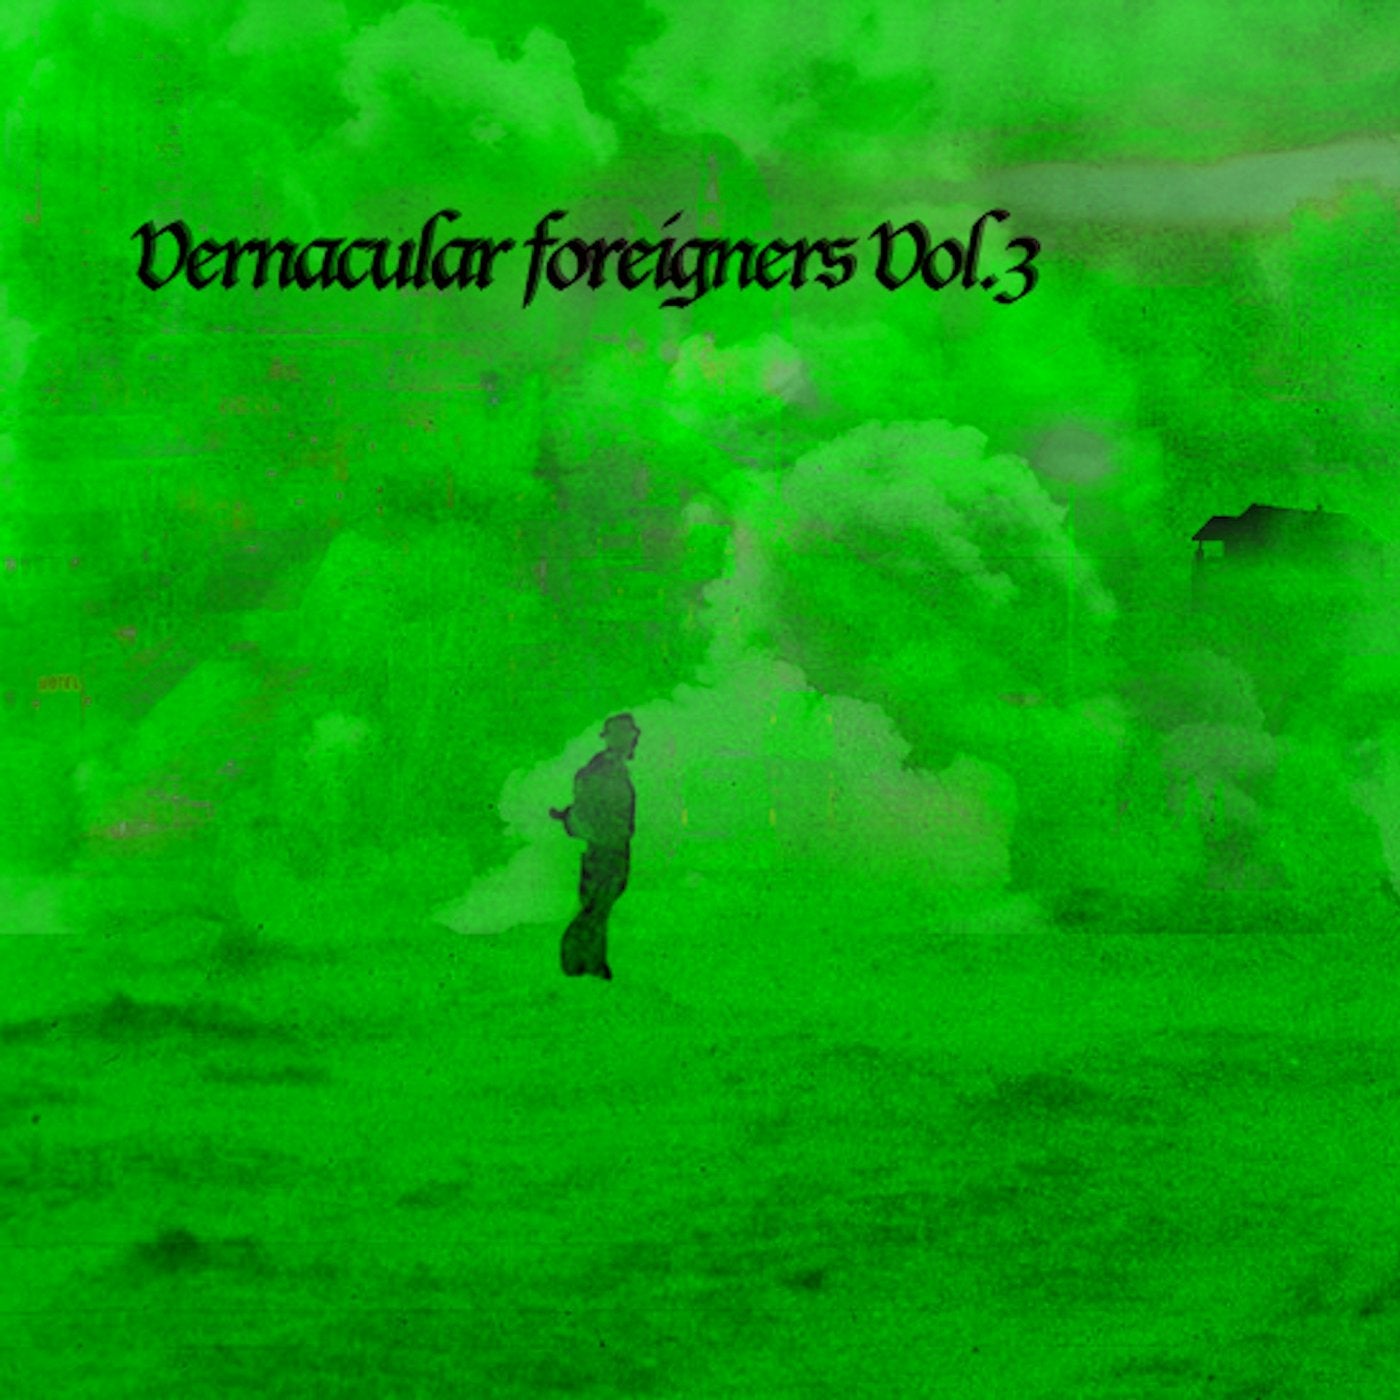 Vernacular foreigners, Vol. 3